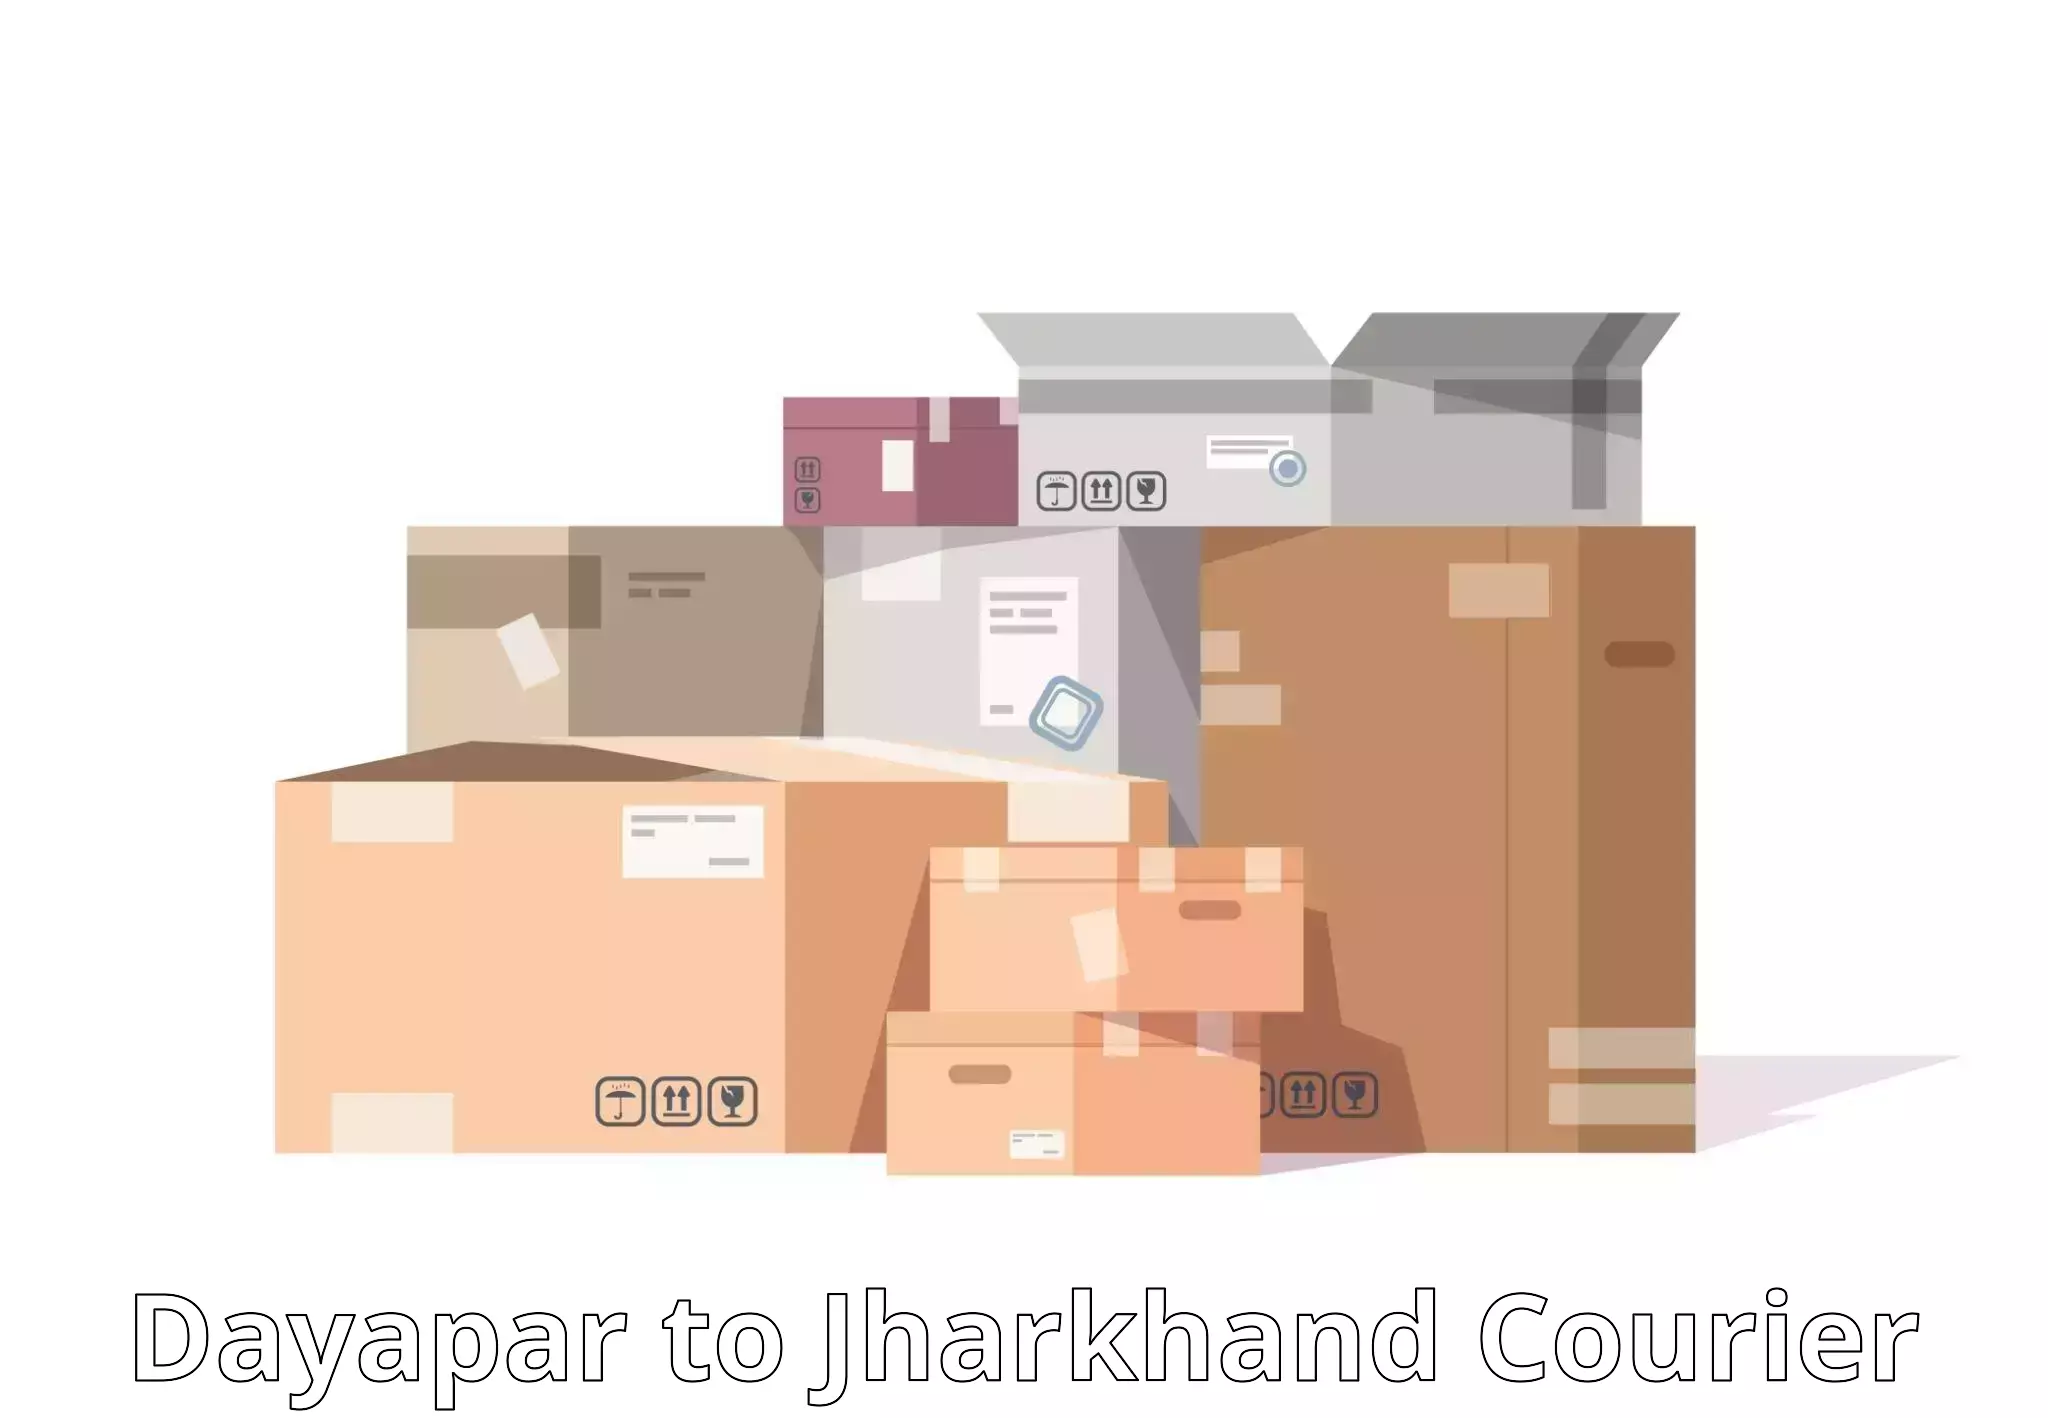 Express delivery capabilities Dayapar to Chakradharpur